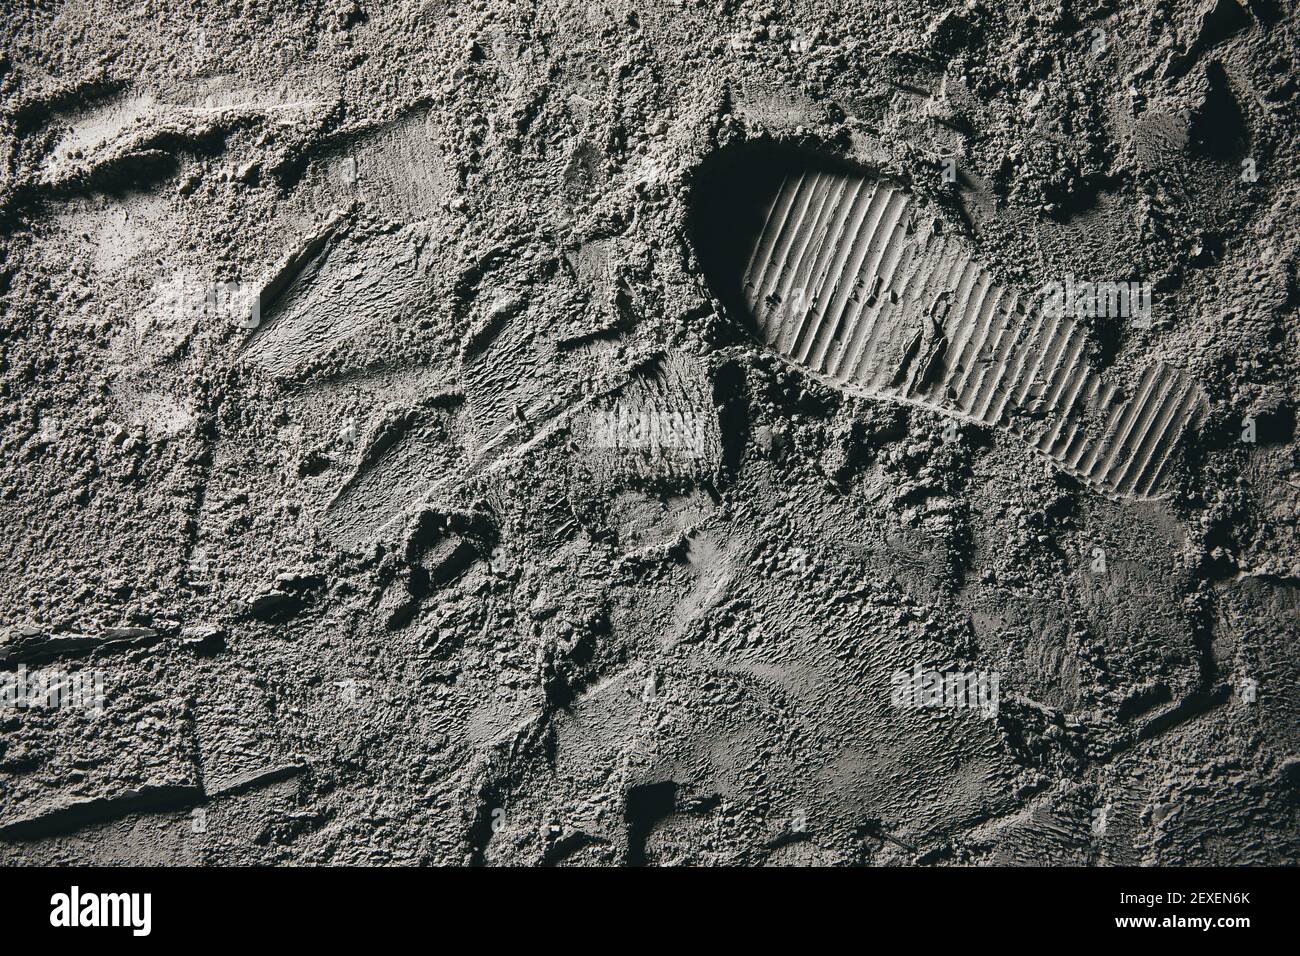 Следы луны 14 глава вк. Следы на Луне. Moon footprint. Footprint on the Moon. Макросъемка следов.